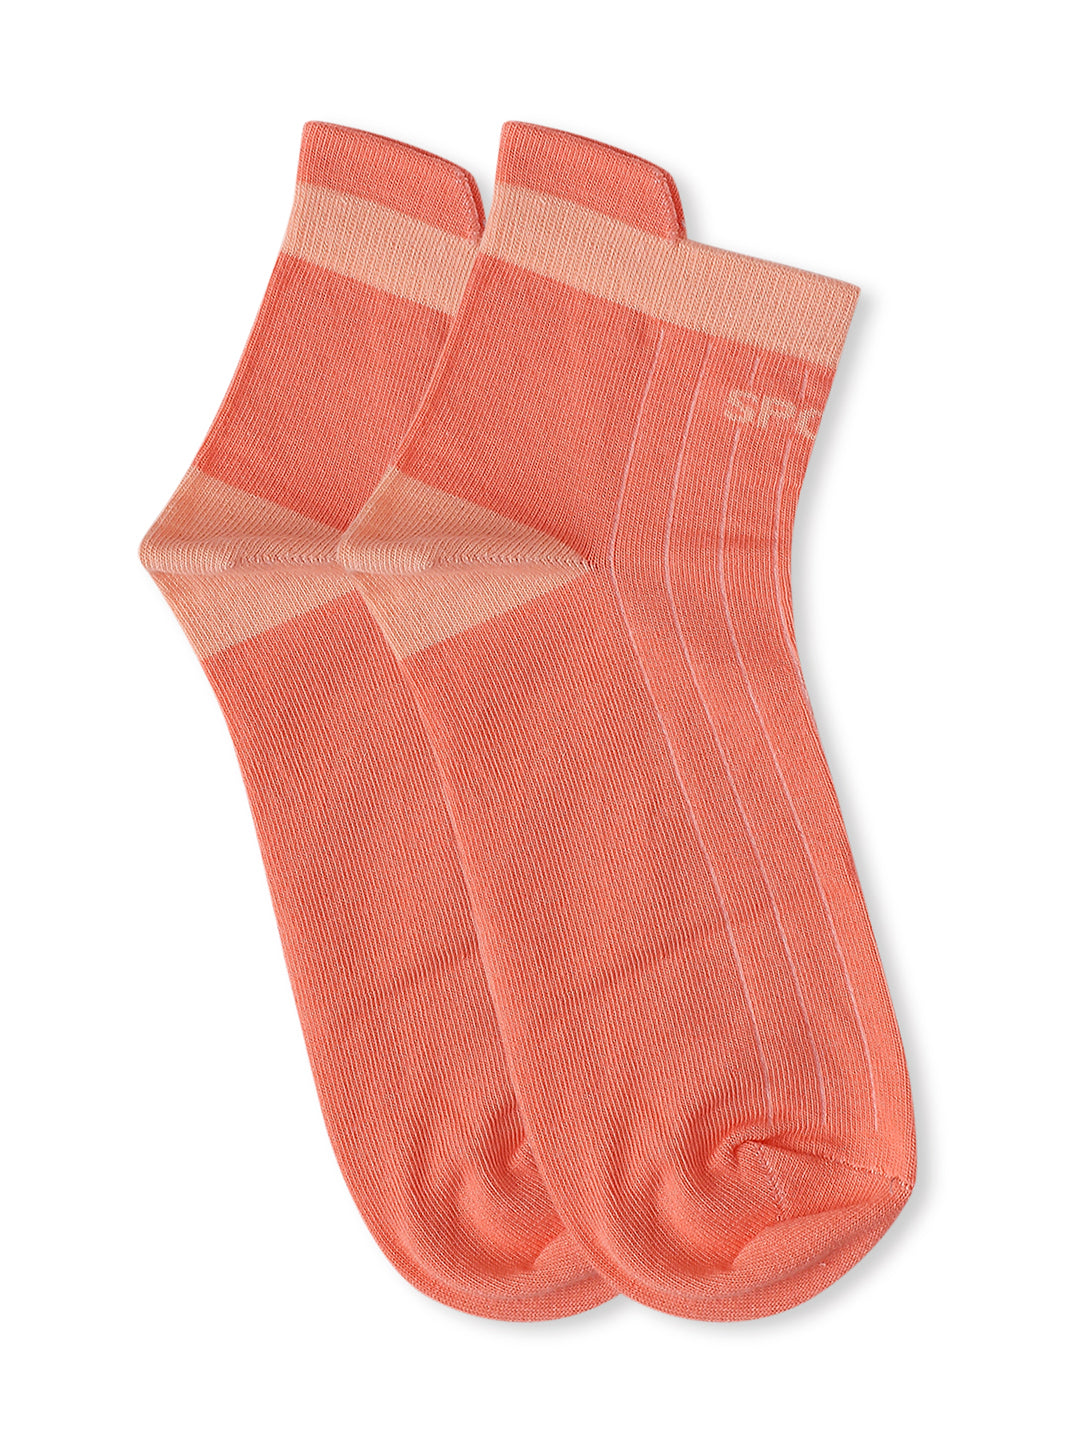 Feelings PO5 Sports Solid 002 Low Cut Assorted Cotton Socks